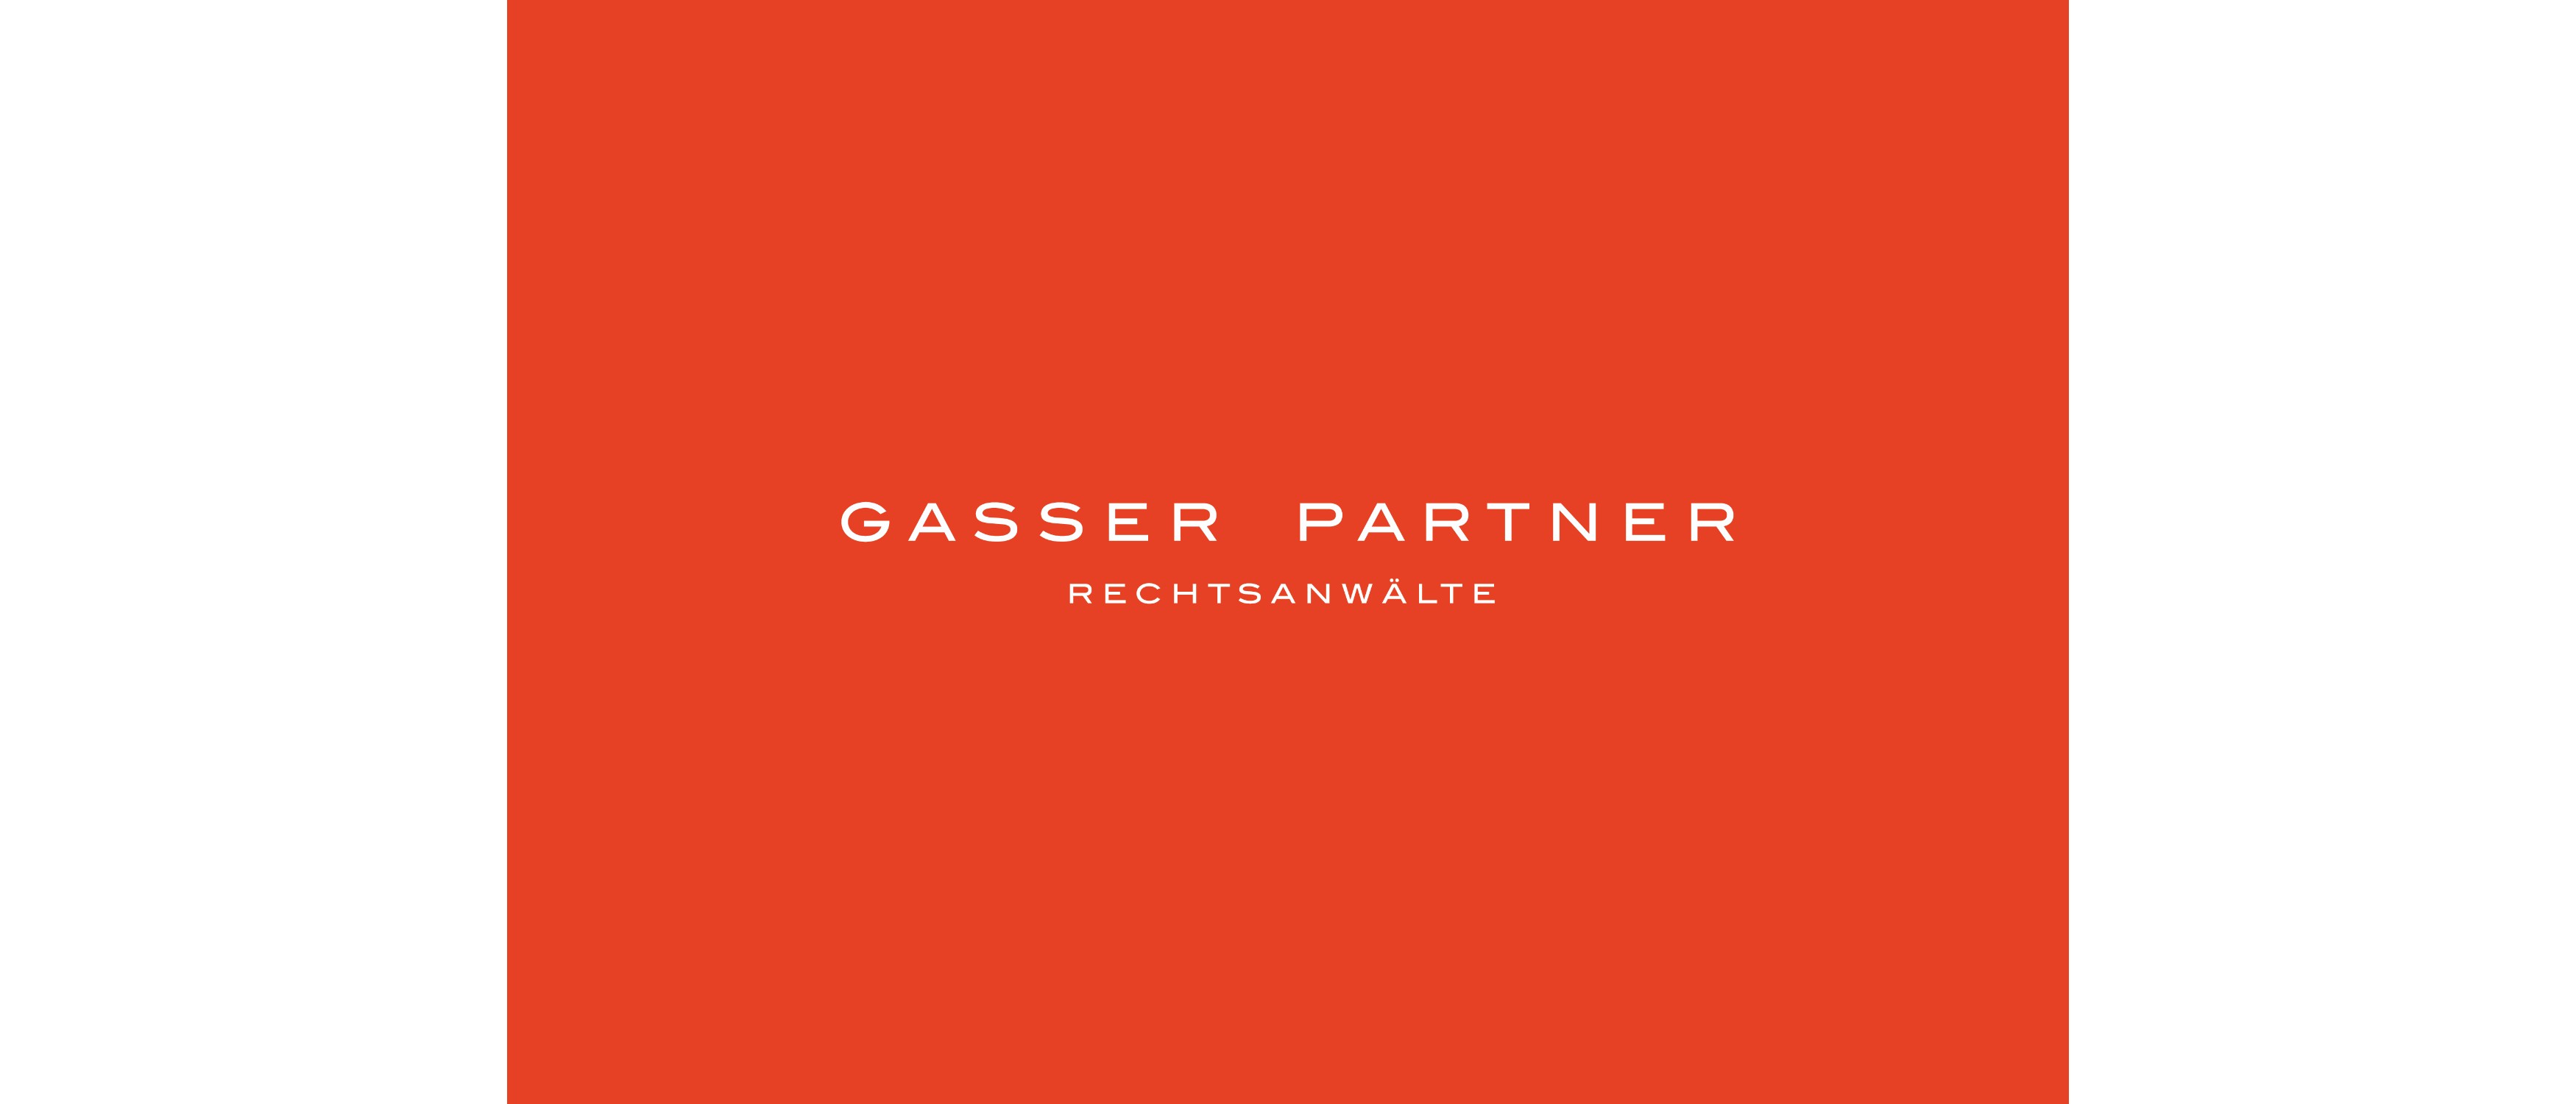 Gasser Partner Rechtsanwälte